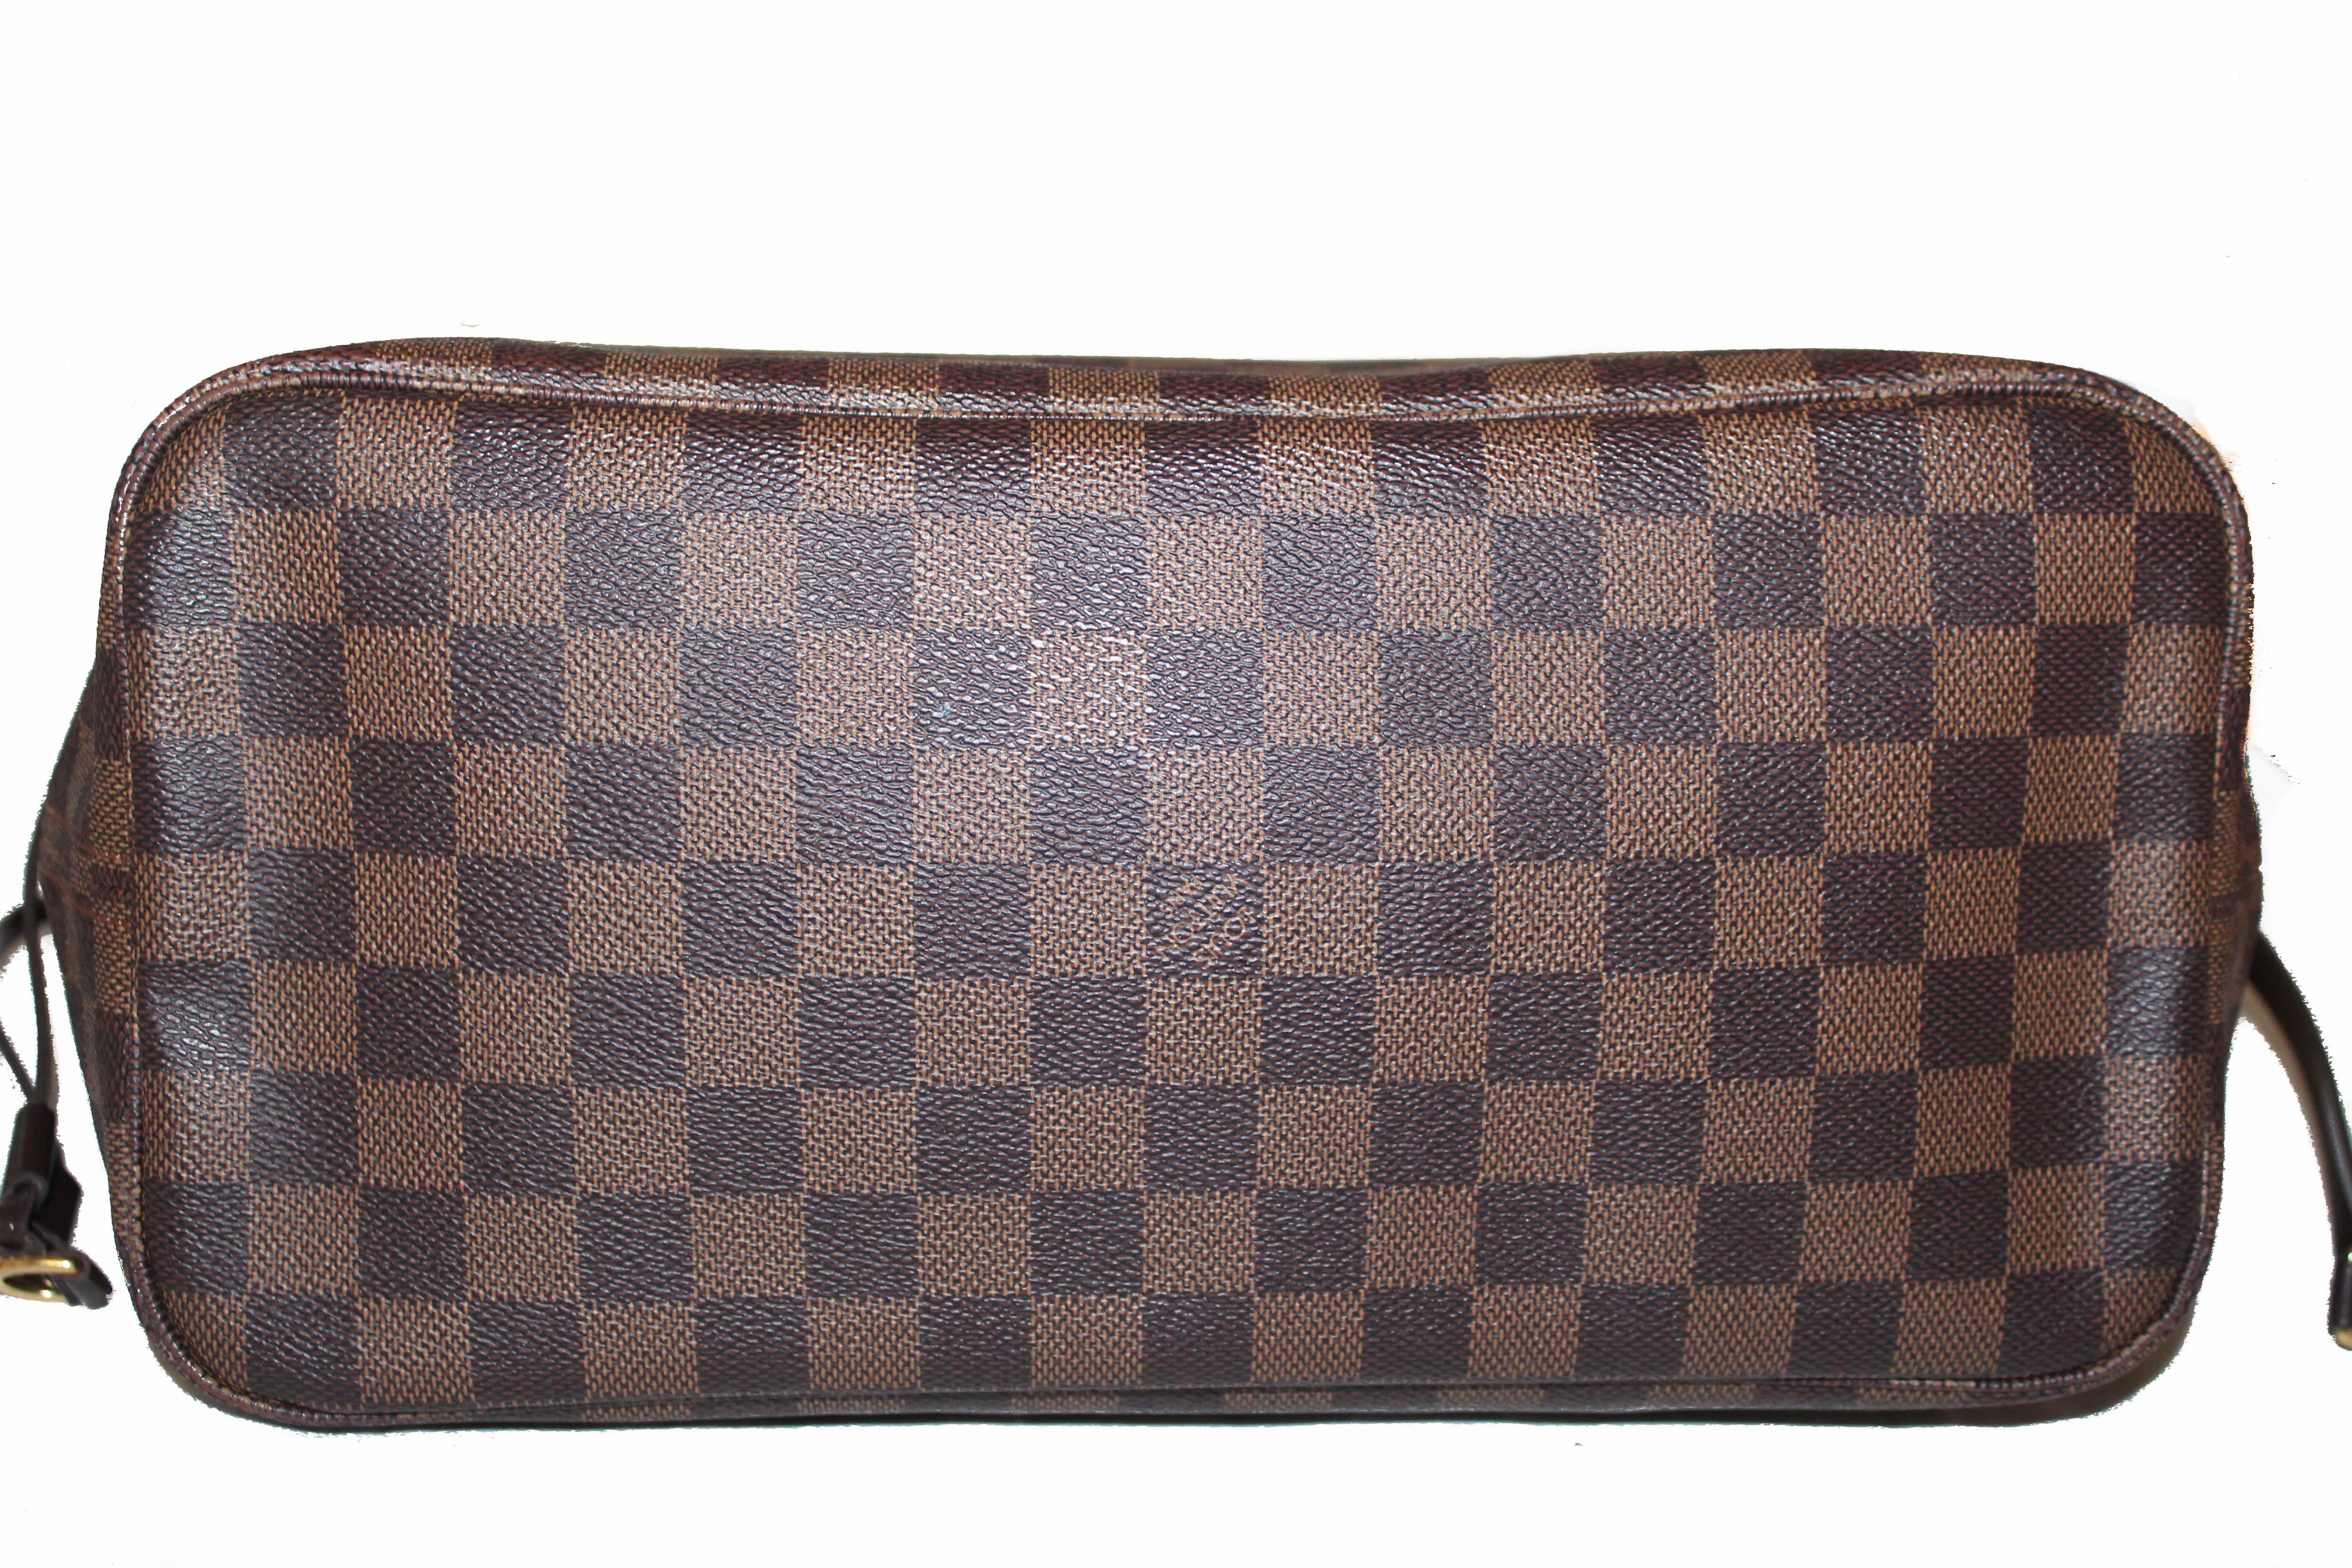 Authentic Louis Vuitton Damier Ebene Neverfull MM Tote Shoulder Bag